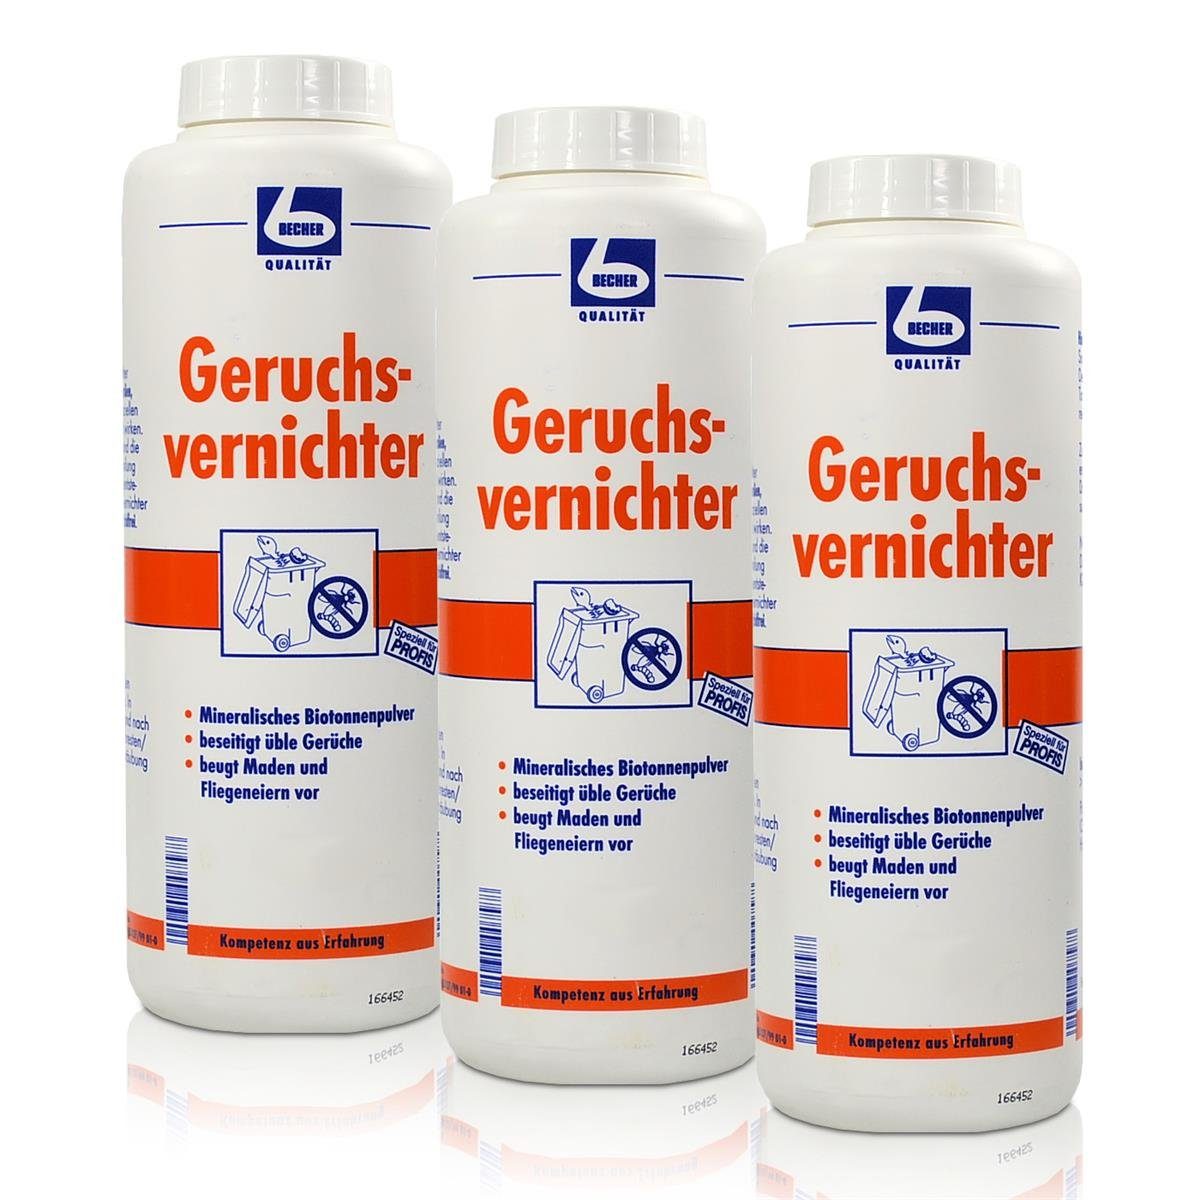 Dr. Becher 3x Dr. Becher Geruchsvernichter 750 g - beseitigtle Gerüche Spezialwaschmittel